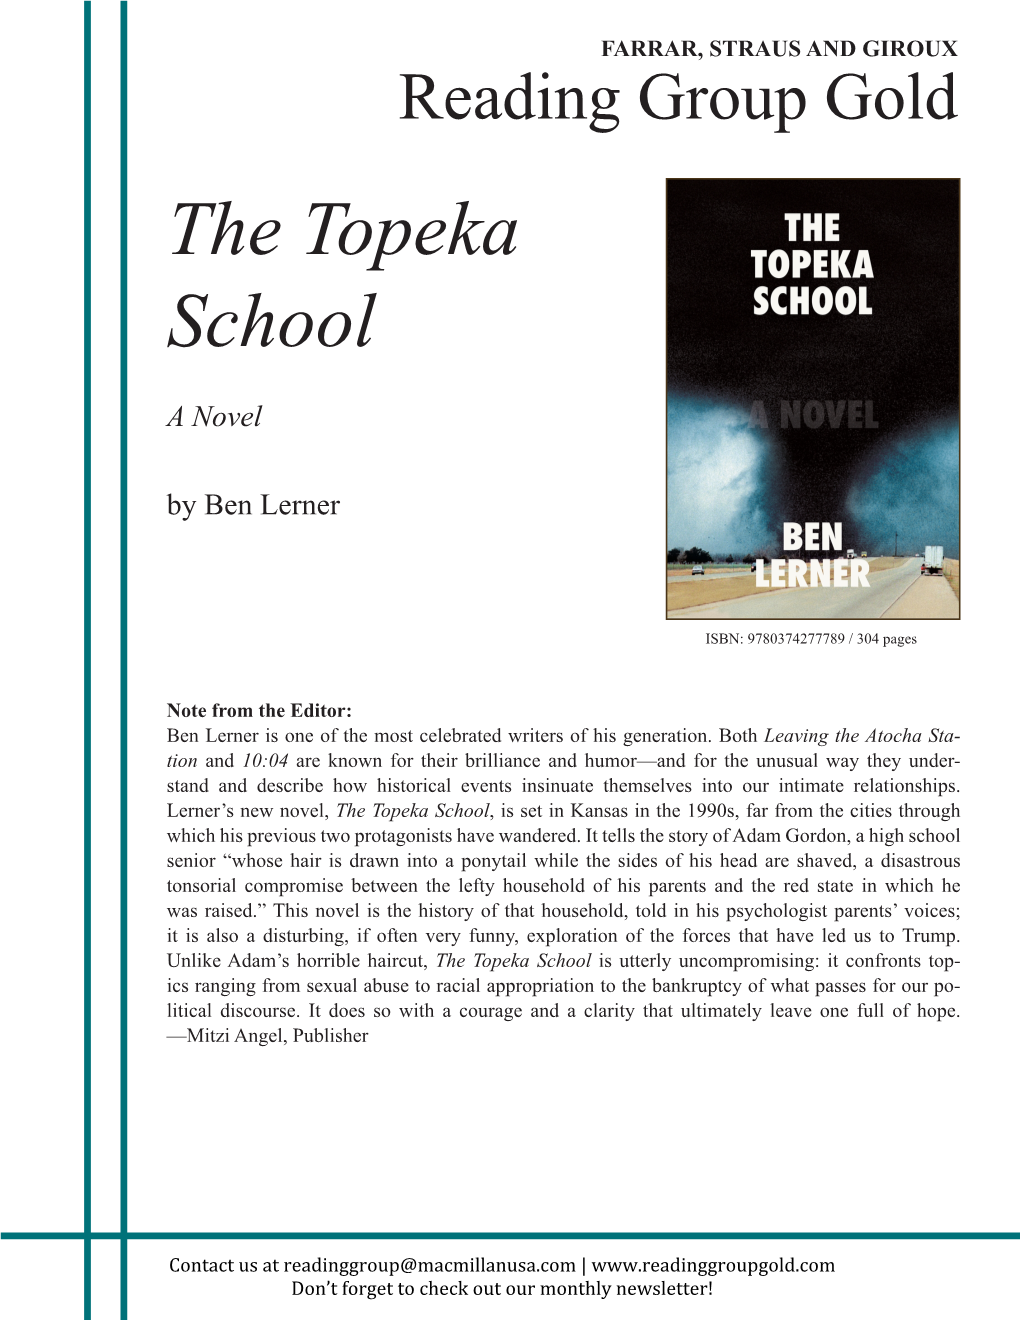 The Topeka School a Novel by Ben Lerner